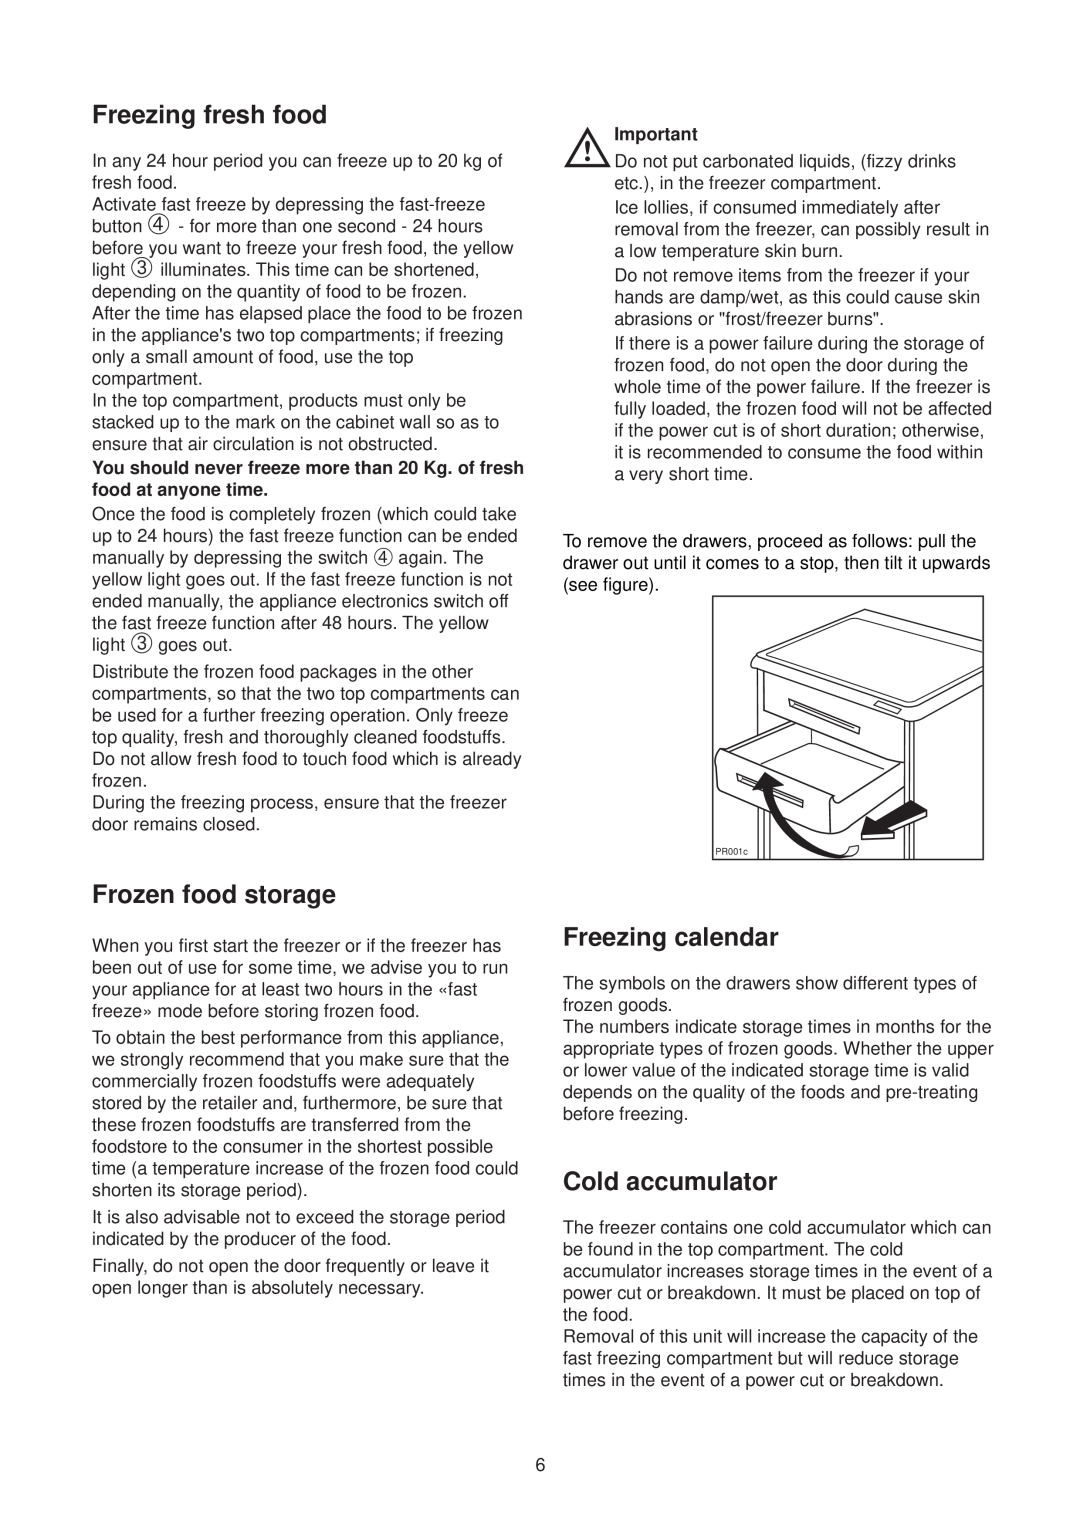 Zanussi ZFE 74 W manual Freezing fresh food, Frozen food storage, Freezing calendar, Cold accumulator 